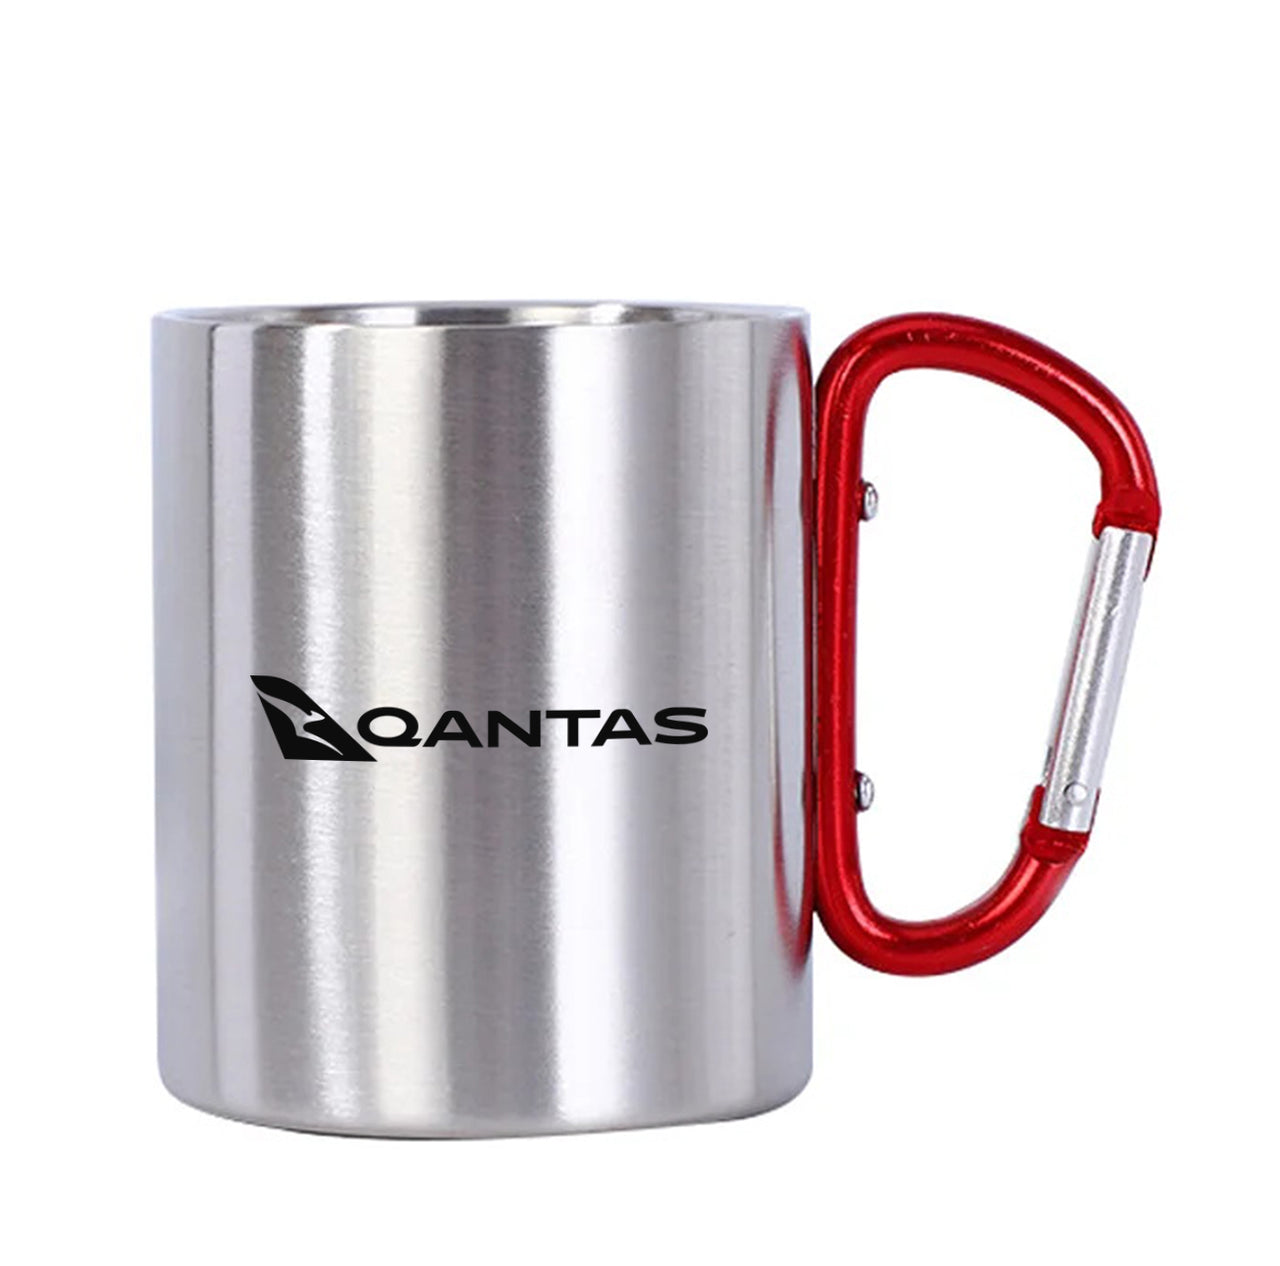 Qantas Airways Airlines Designed Stainless Steel Outdoors Mugs